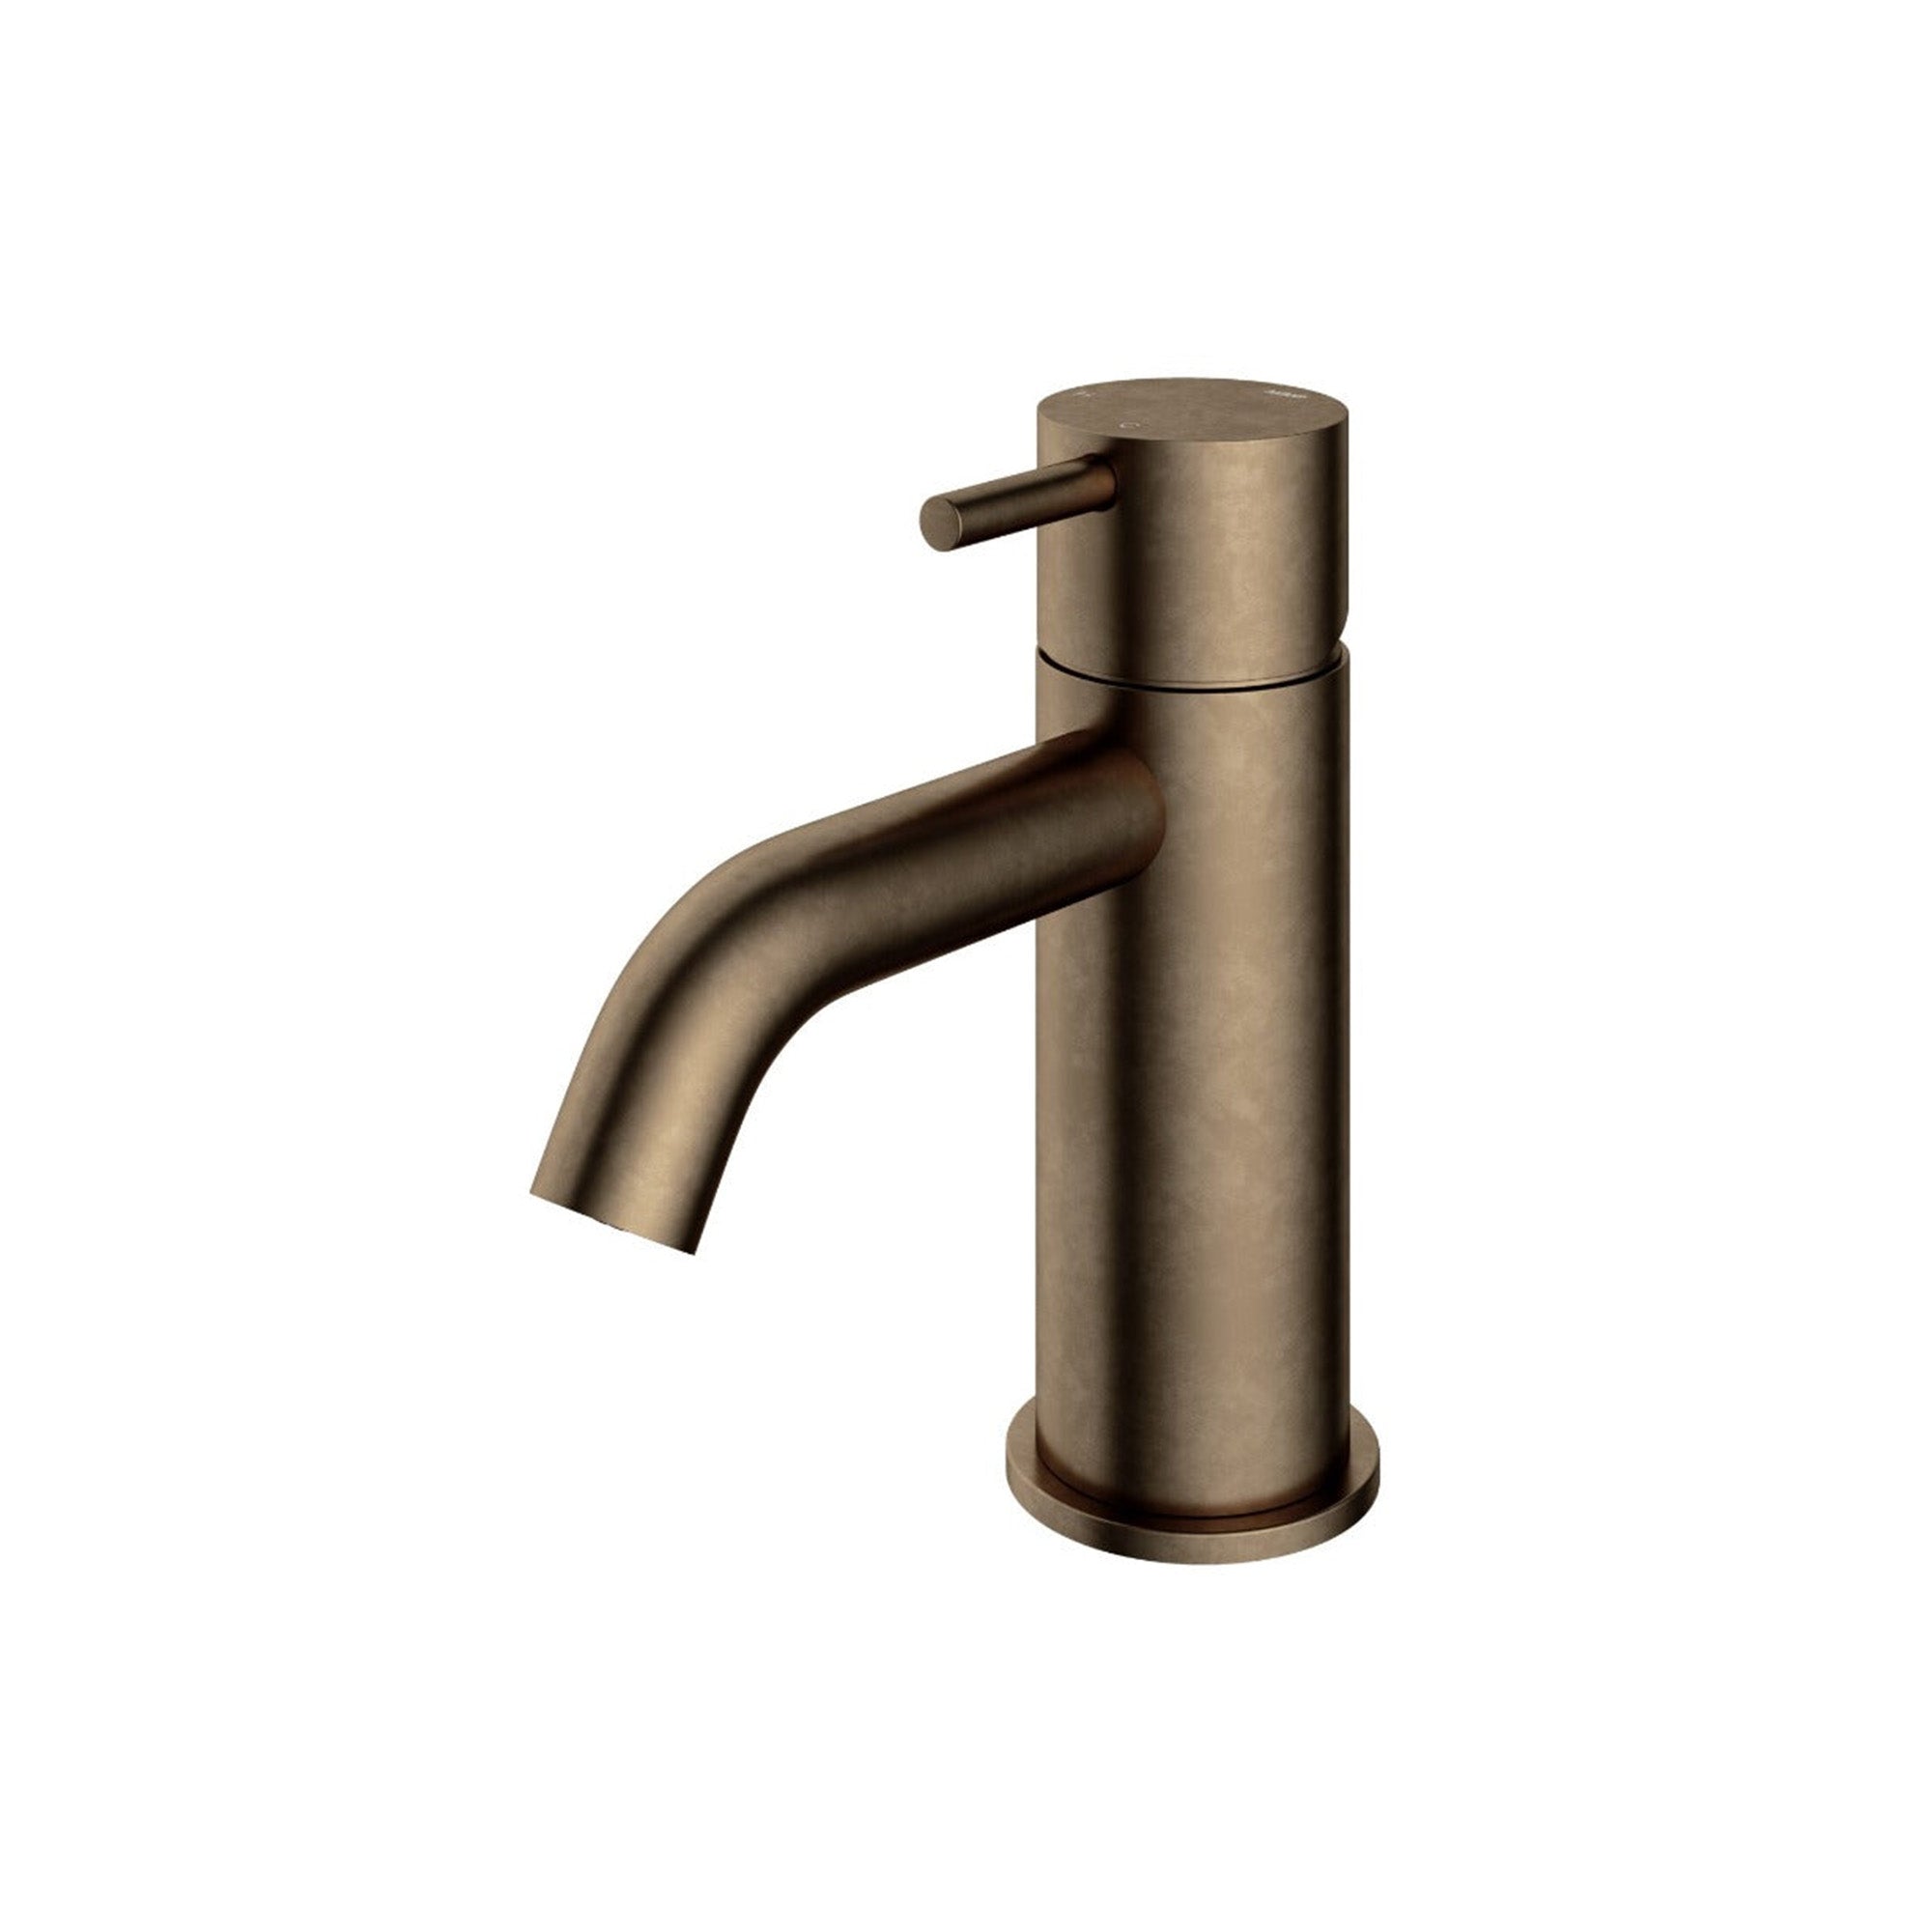 cobber basin mixer tap monobloc curved spout aged brass